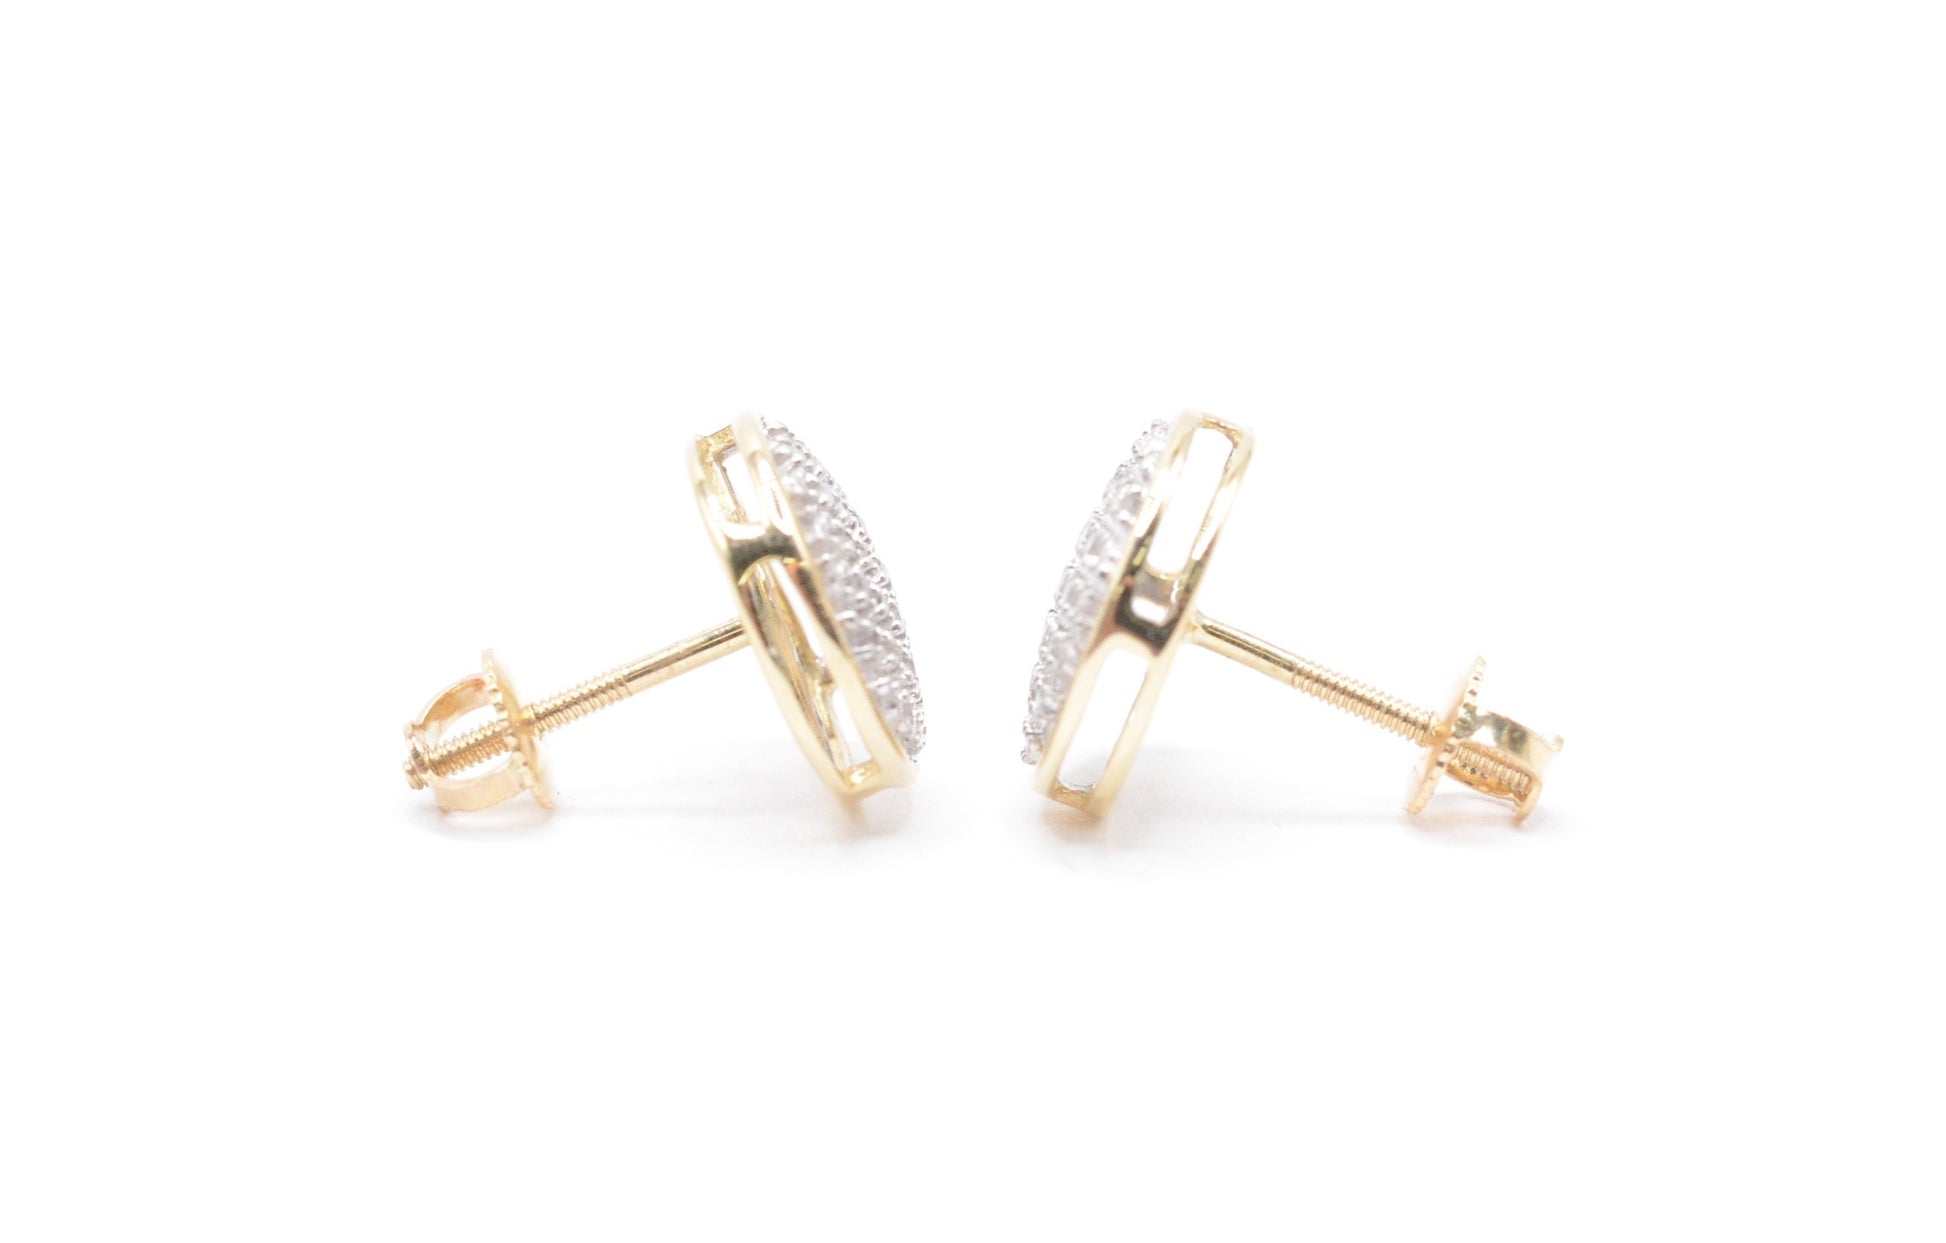 0.15 cttw Micro Round Dome Diamond Stud Earrings 10K Yellow Gold Kids Earrings